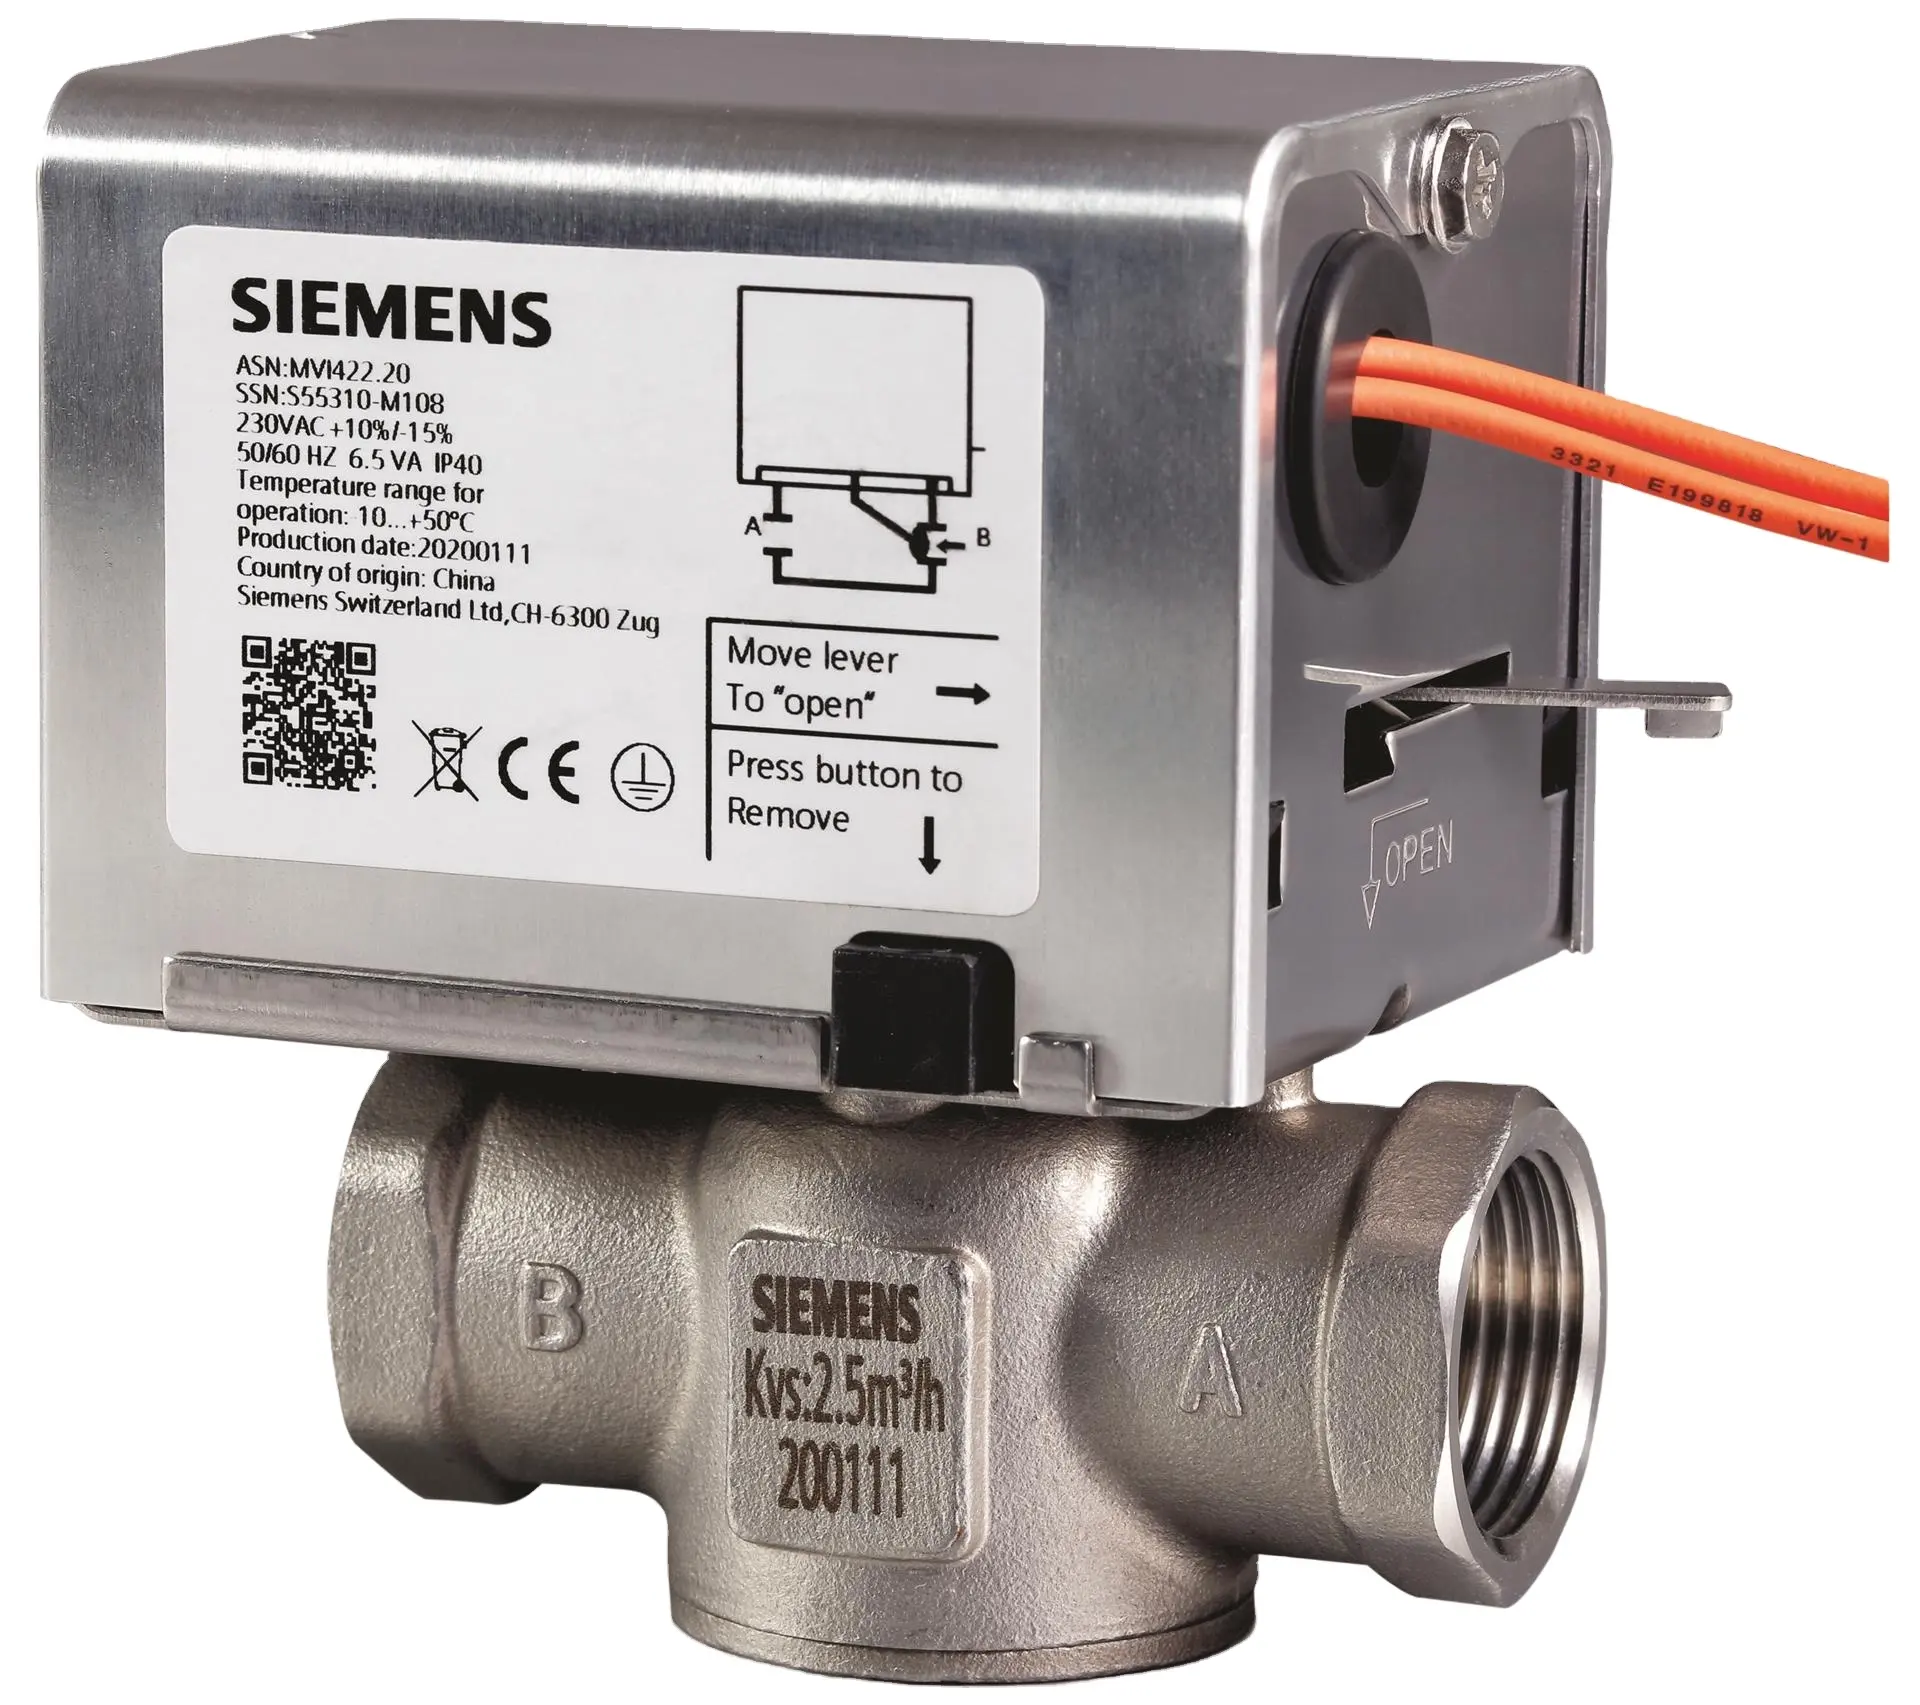 Siemens valvola a bobina aria condizionata valvola valvola valvola MVI461.20 in magazzino